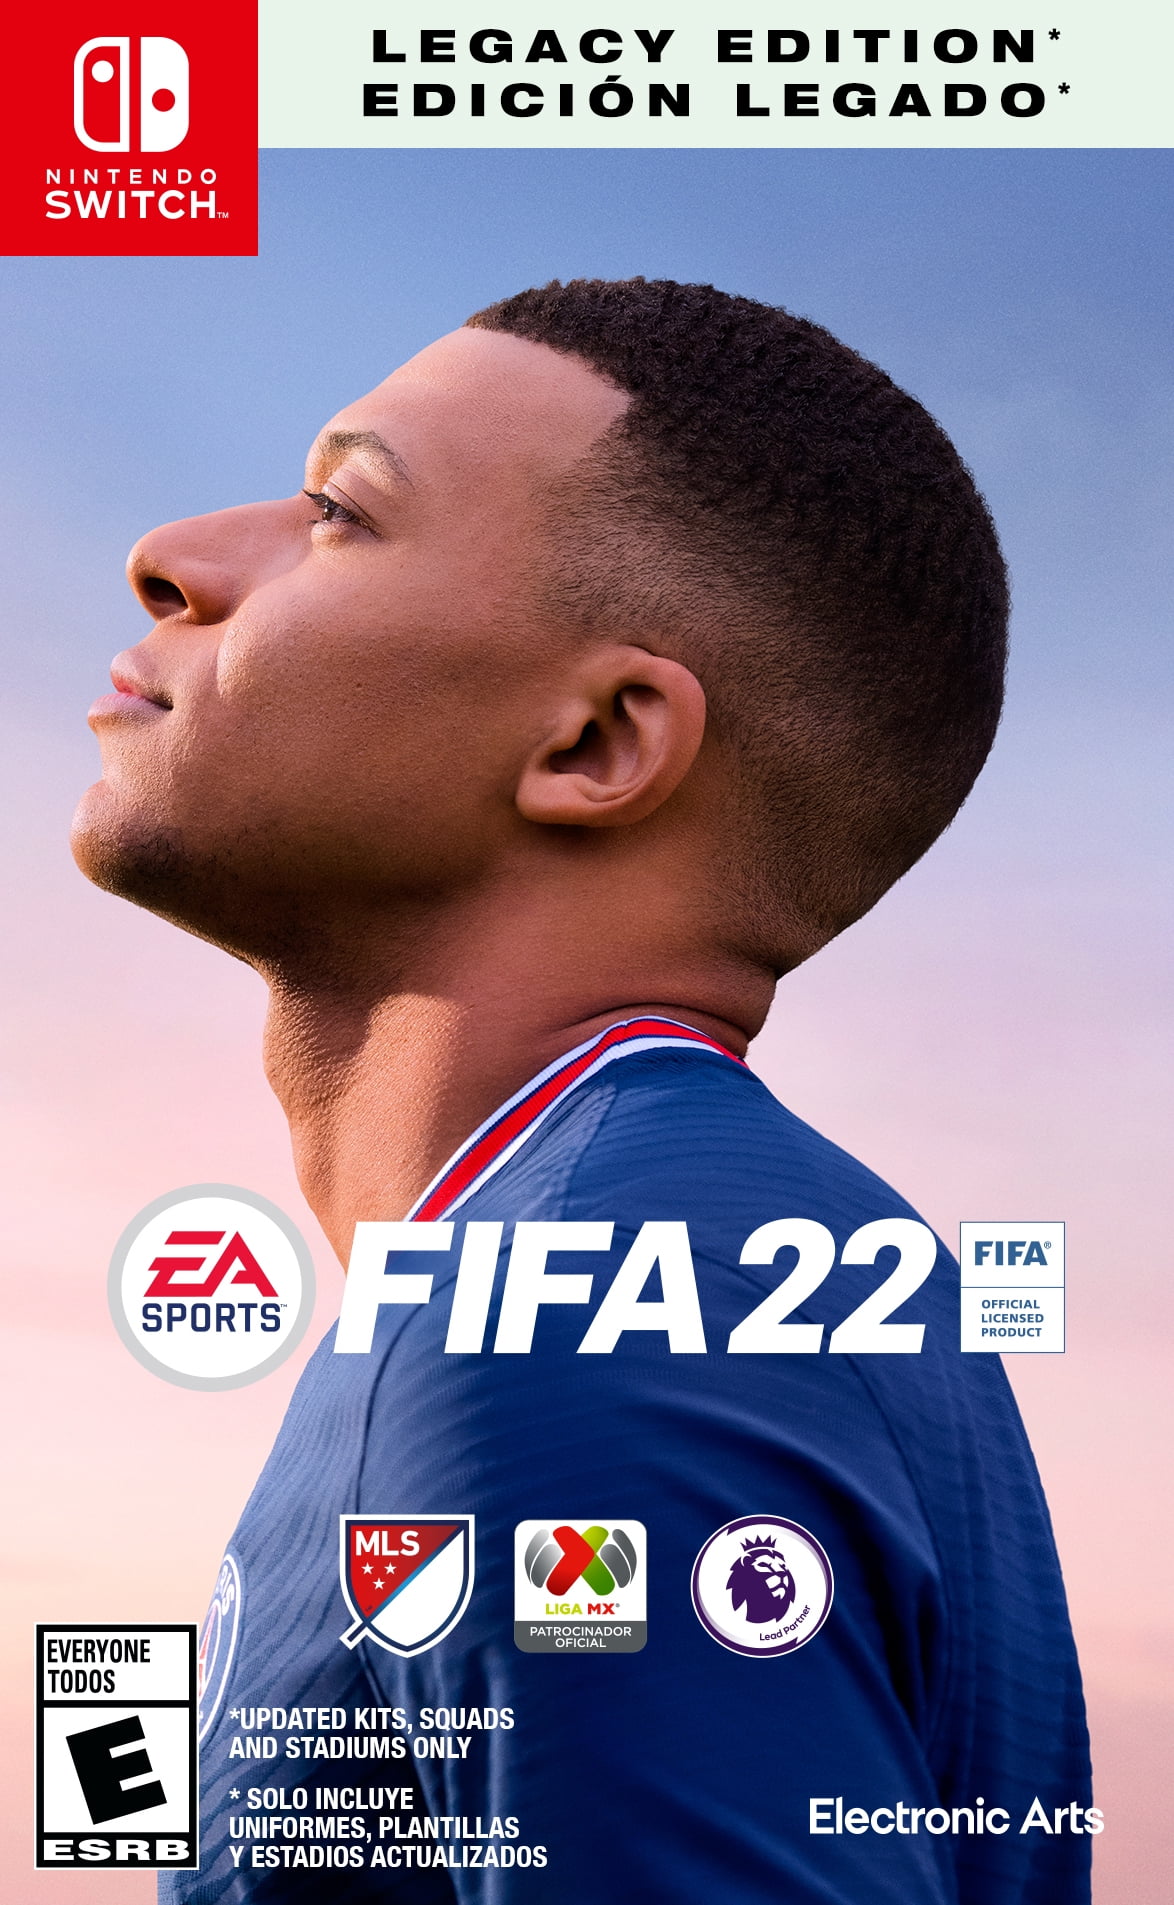  FIFA 23 Legacy Edition - Nintendo Switch : Electronic Arts